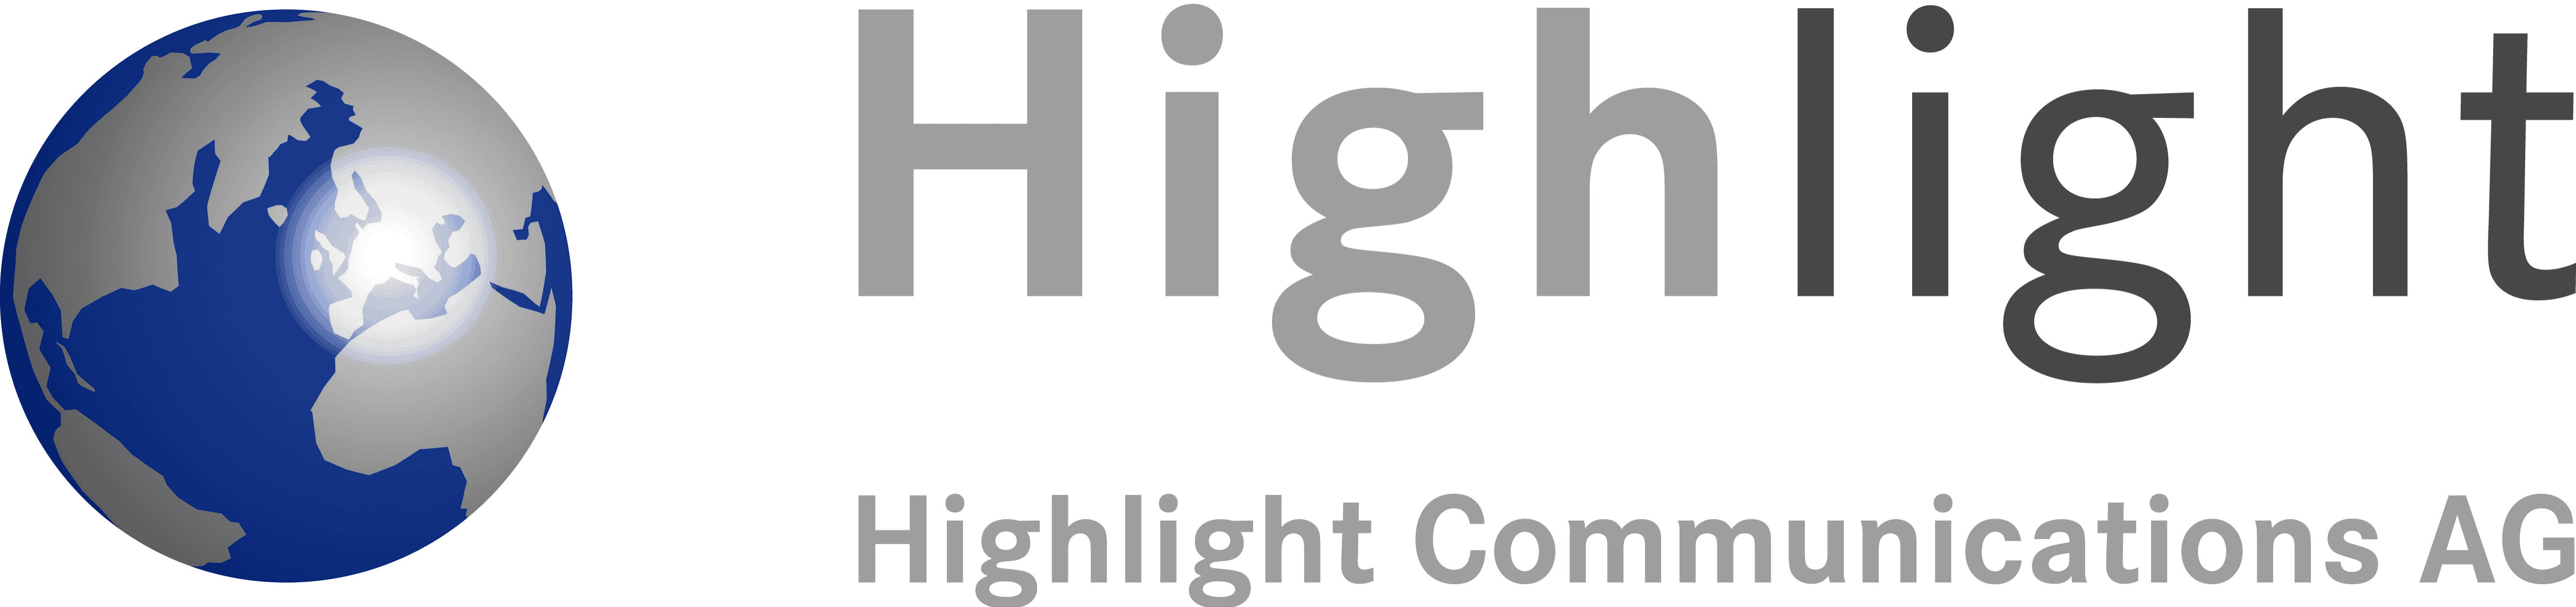 Highlight Communications AG